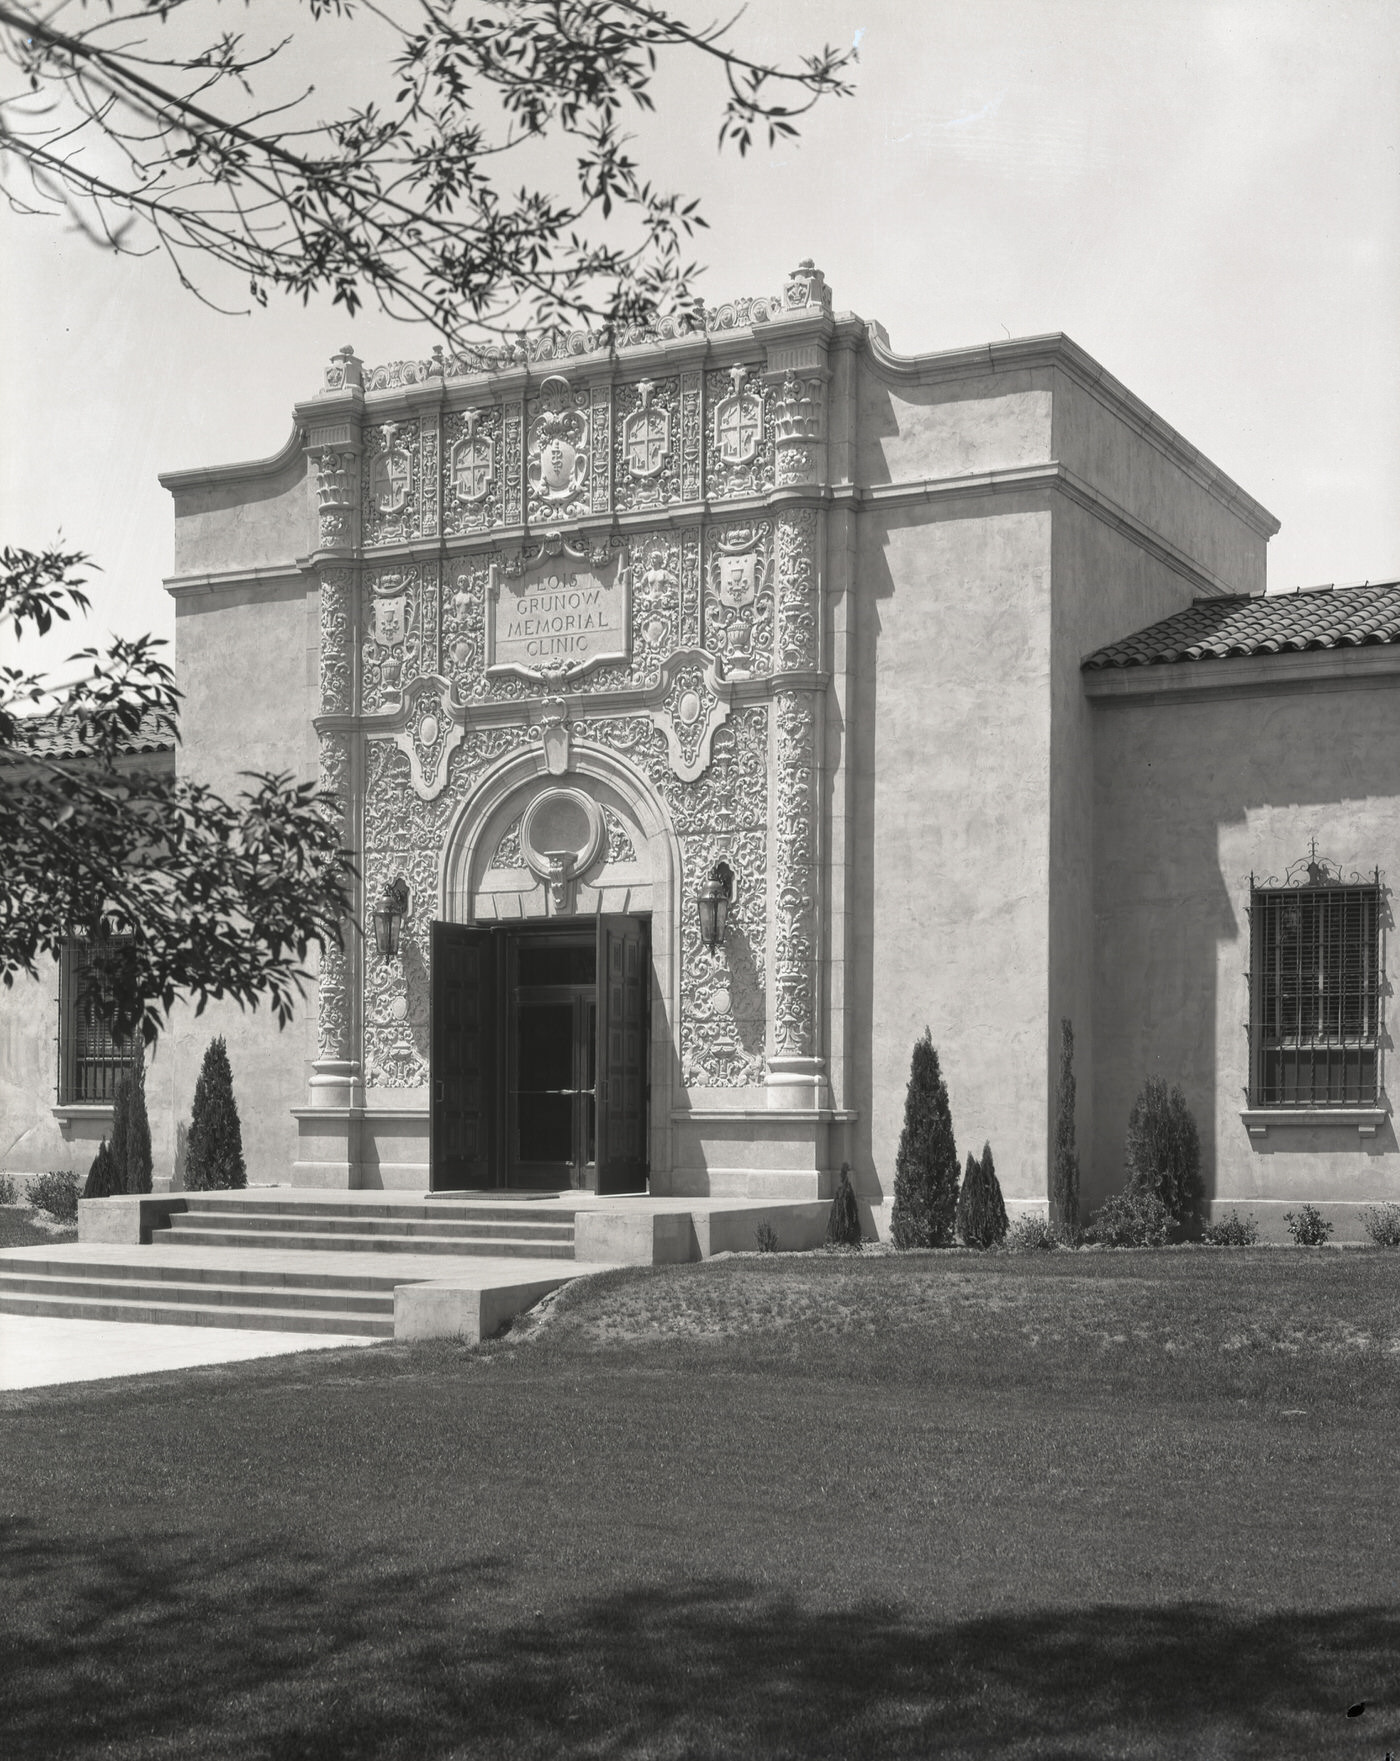 Grunow Memorial Clinic Exterior, 1930s